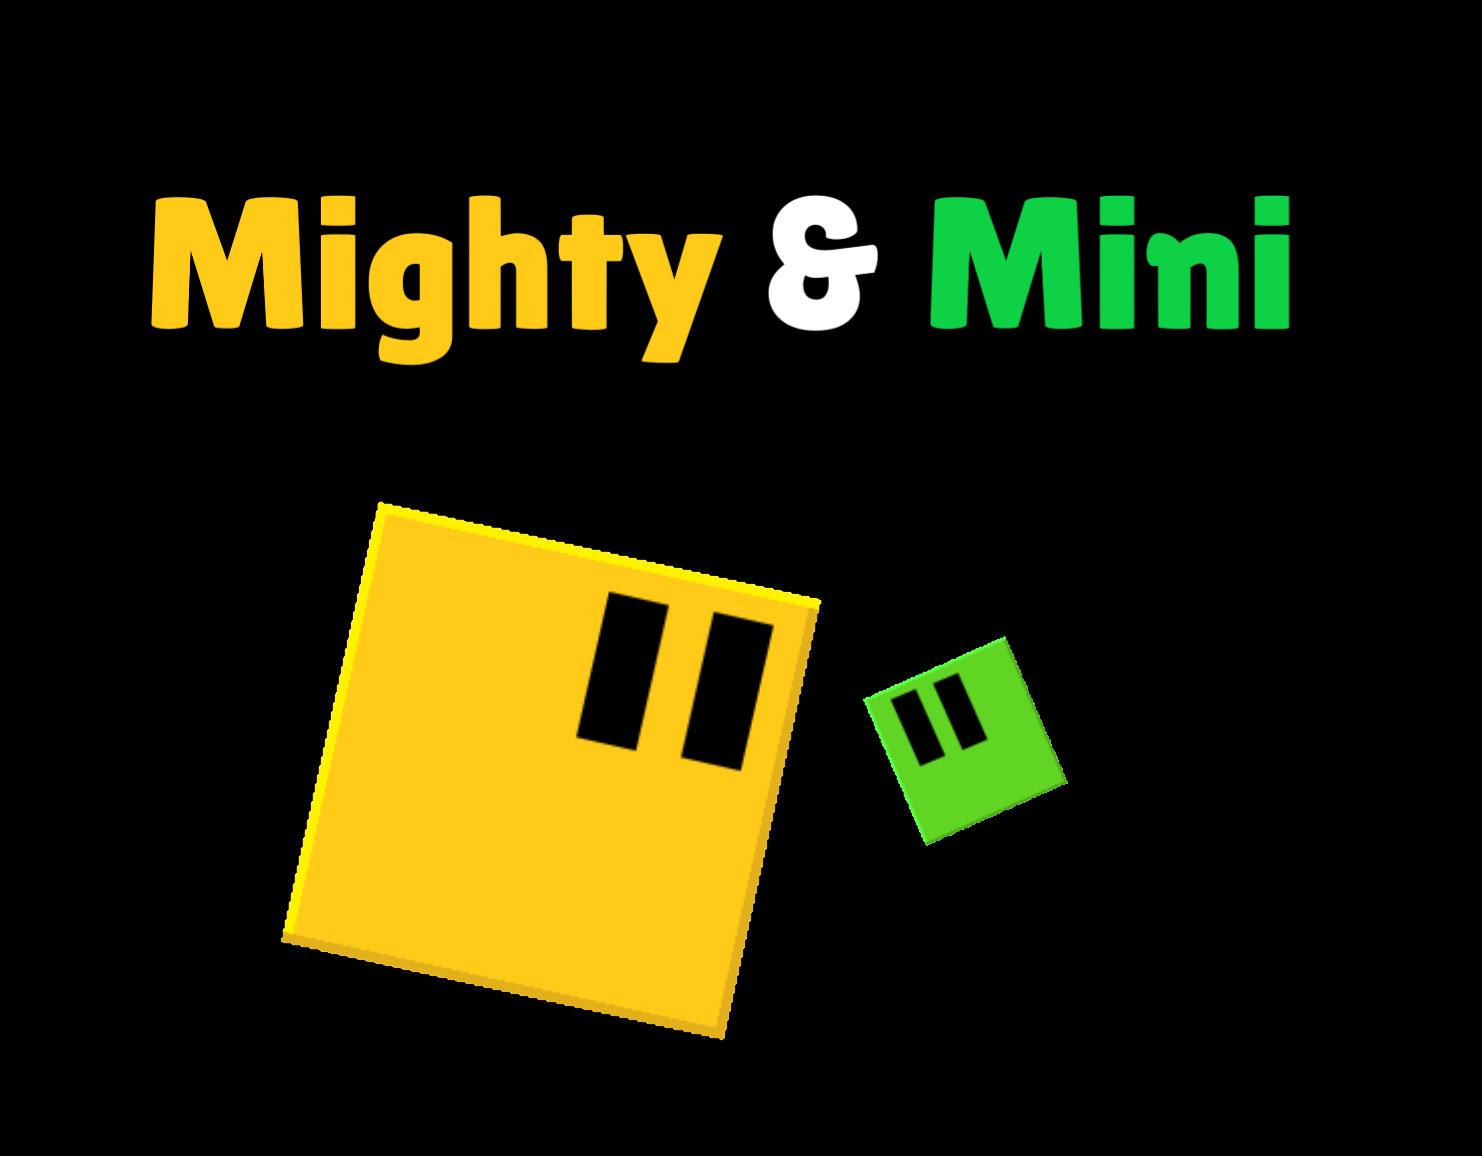 Mighty & Mini